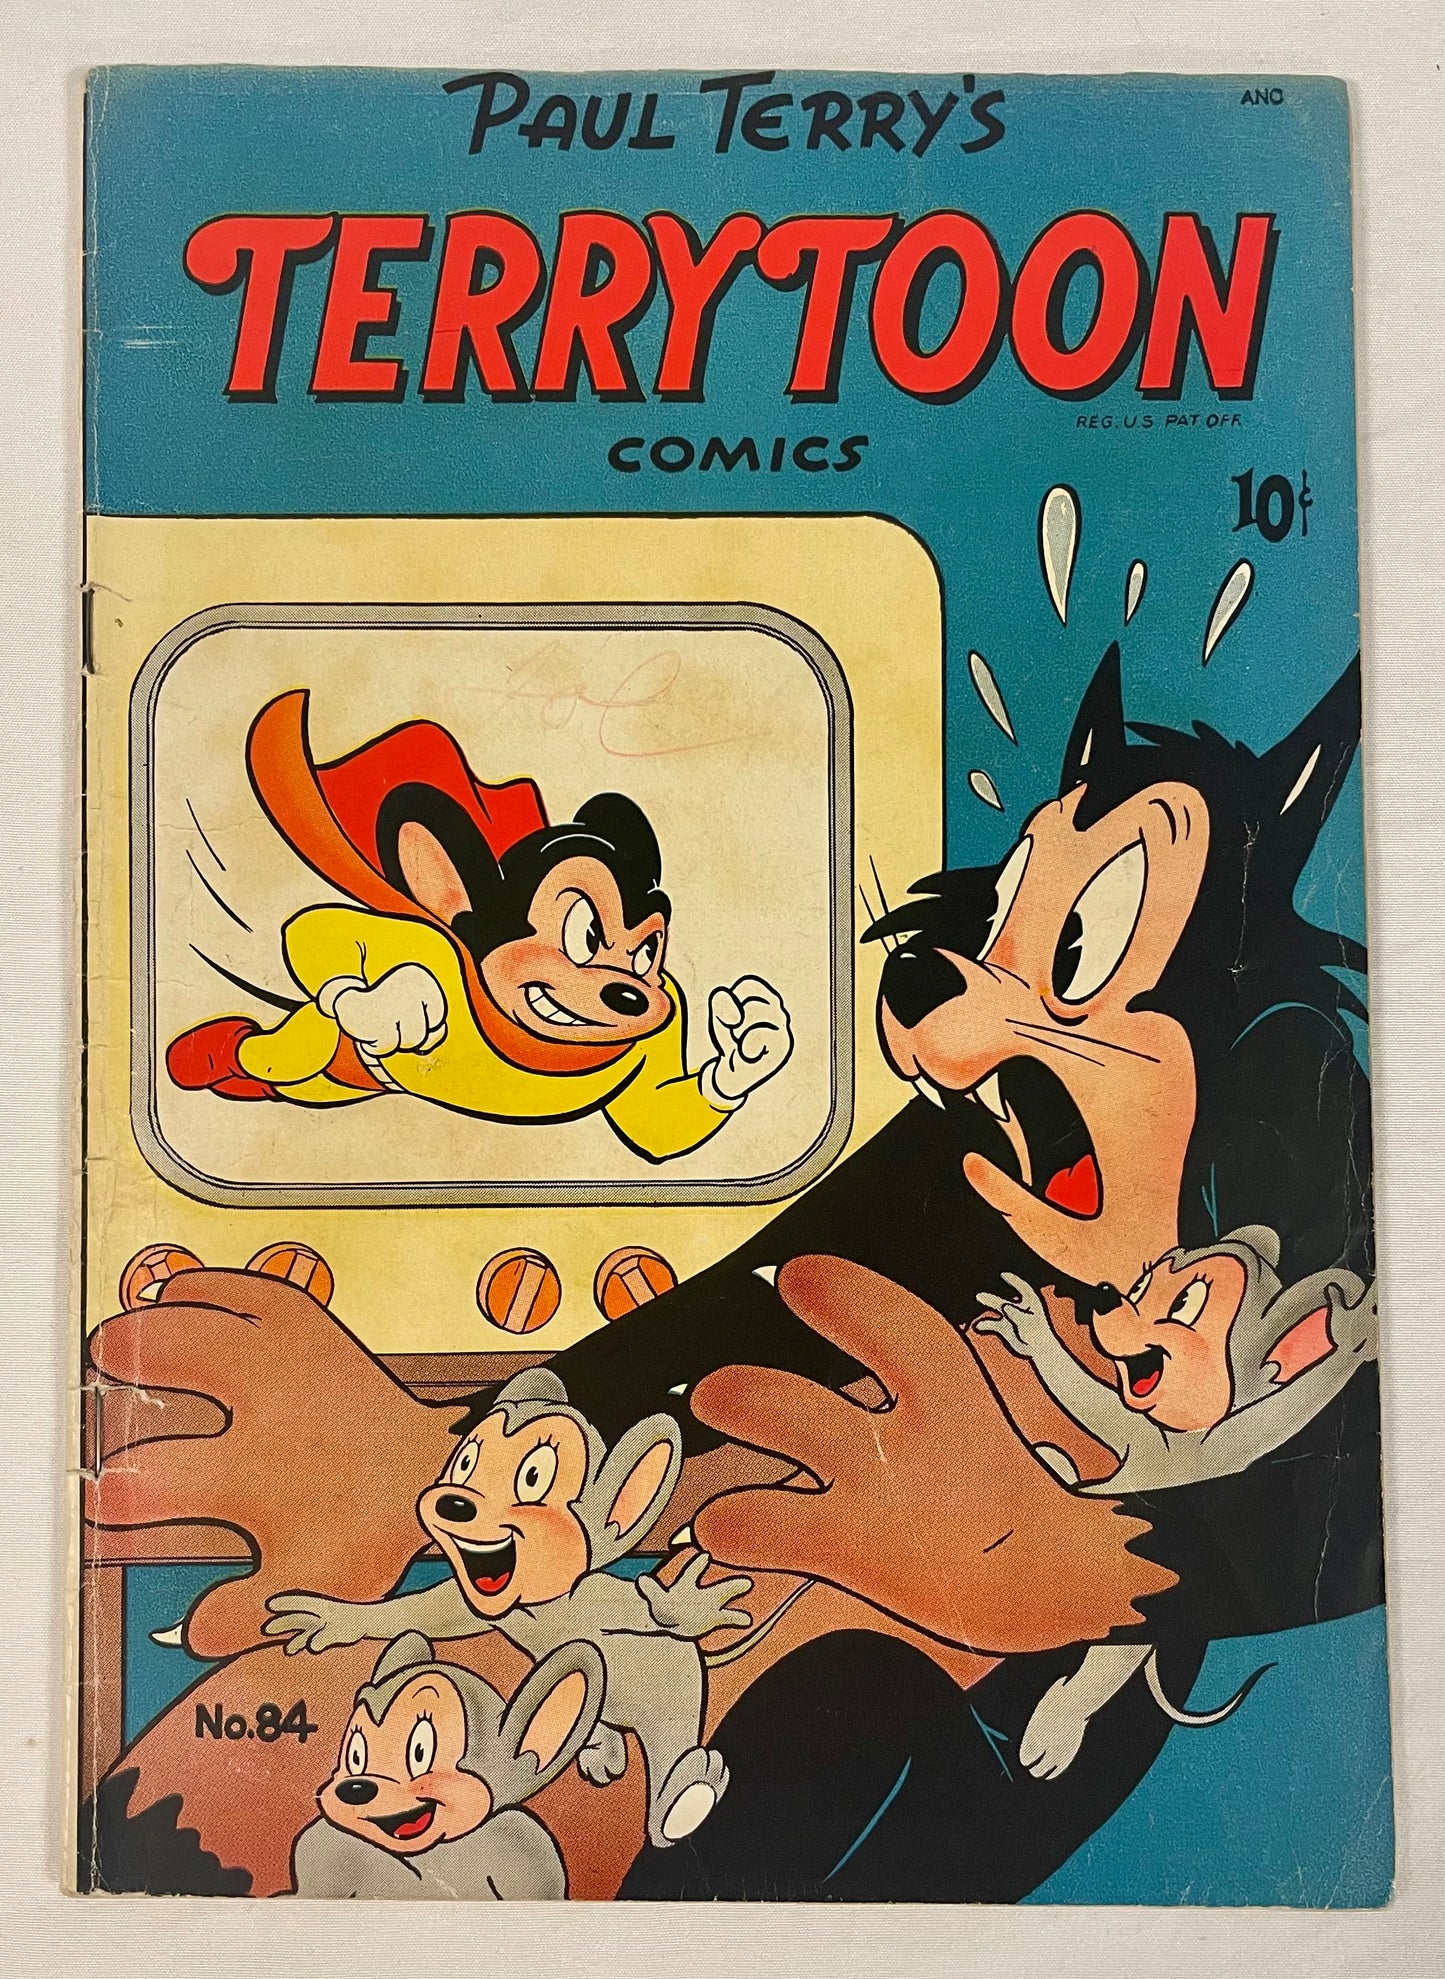 Paul Terry's Terry Toon Comics Vol. 1 No. 84